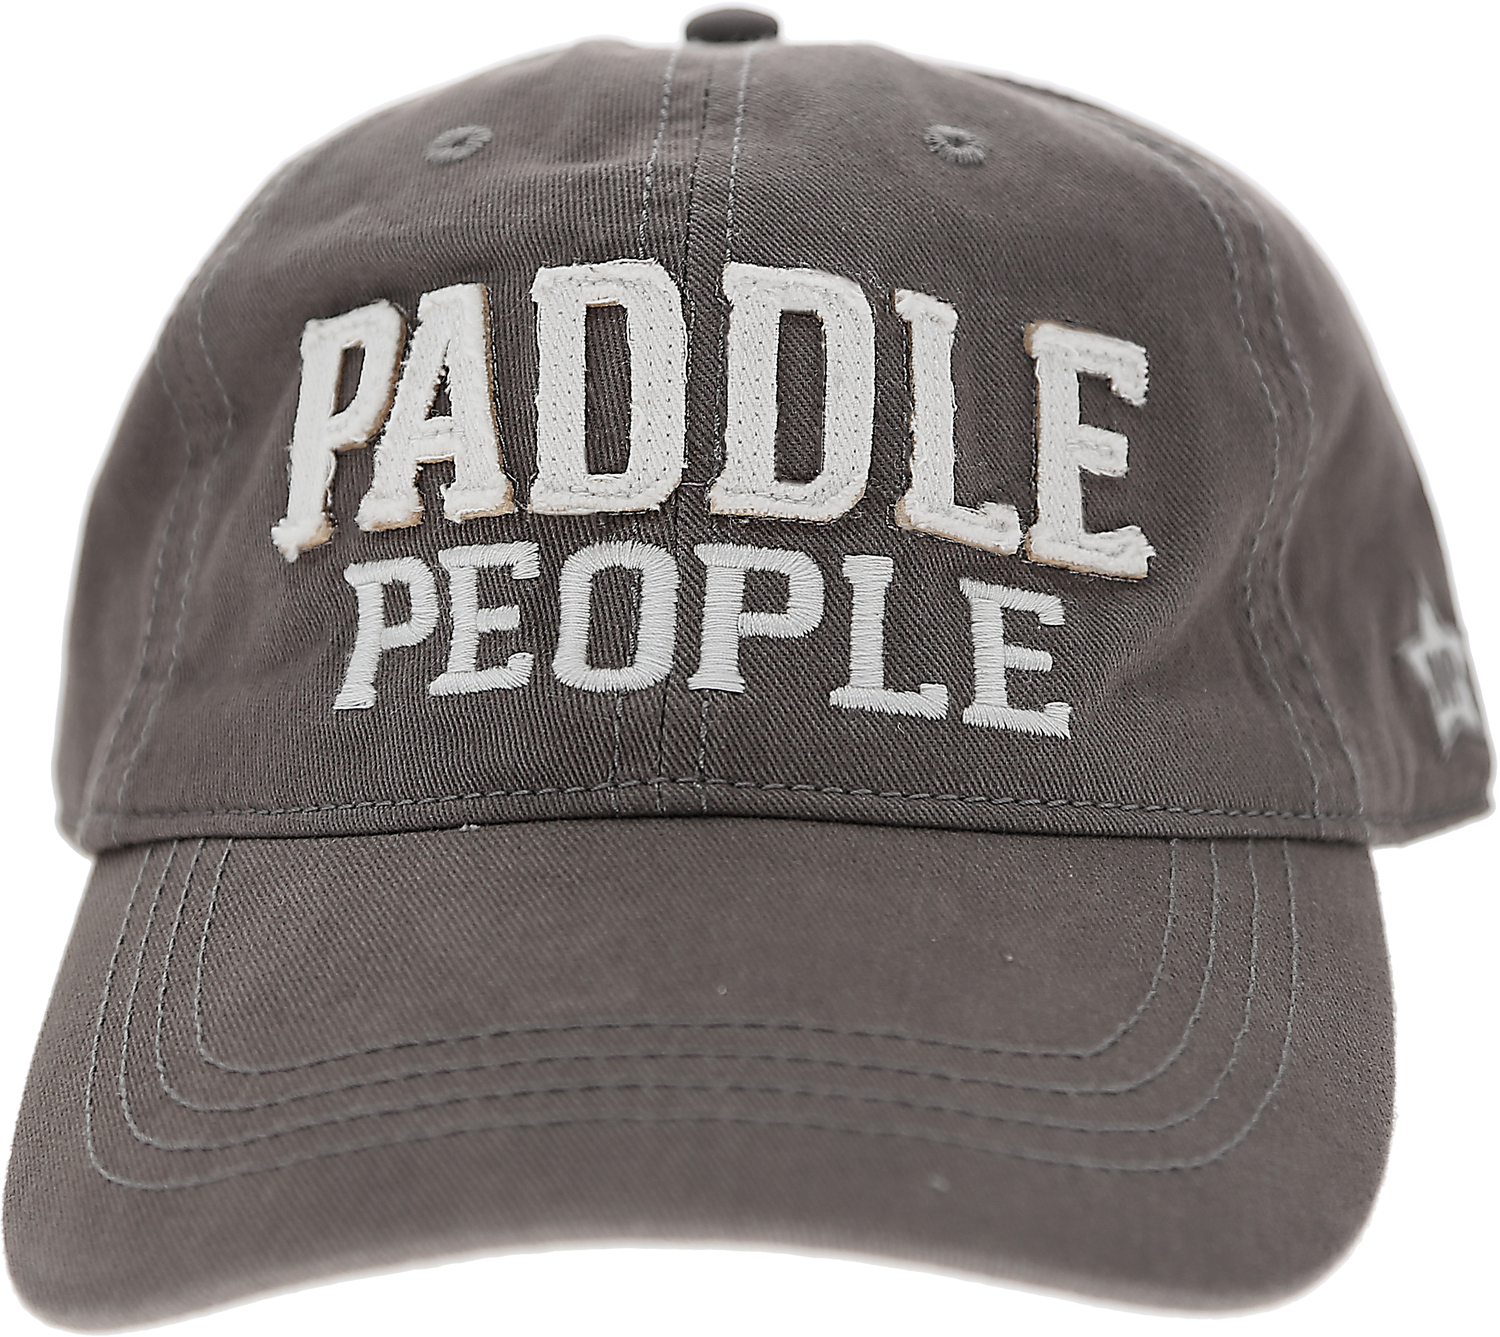 Paddle by We People - Paddle - Dark Gray Adjustable Hat